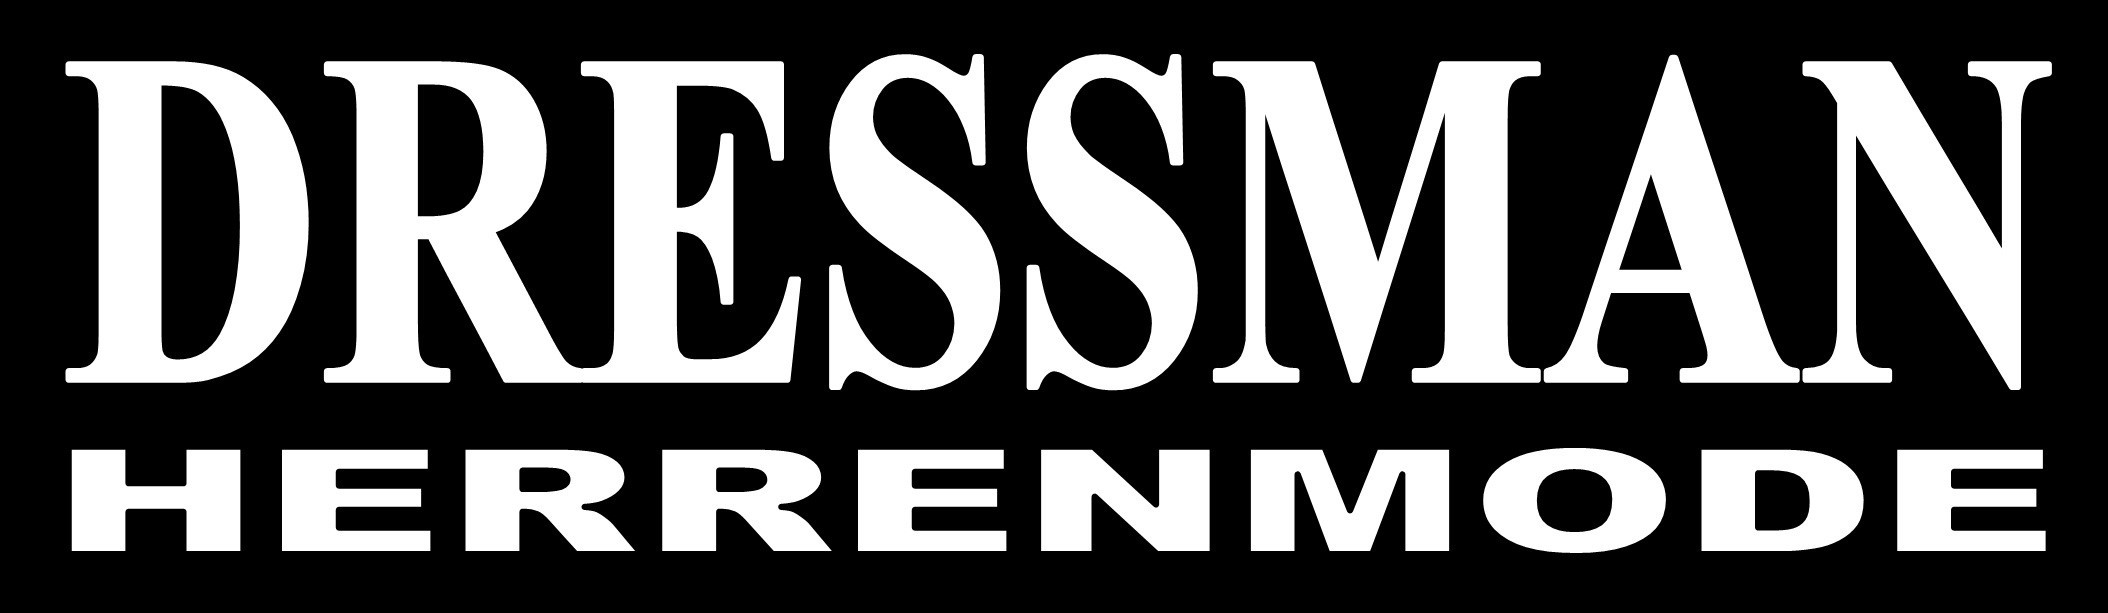 Dressman Herrenmode Logo